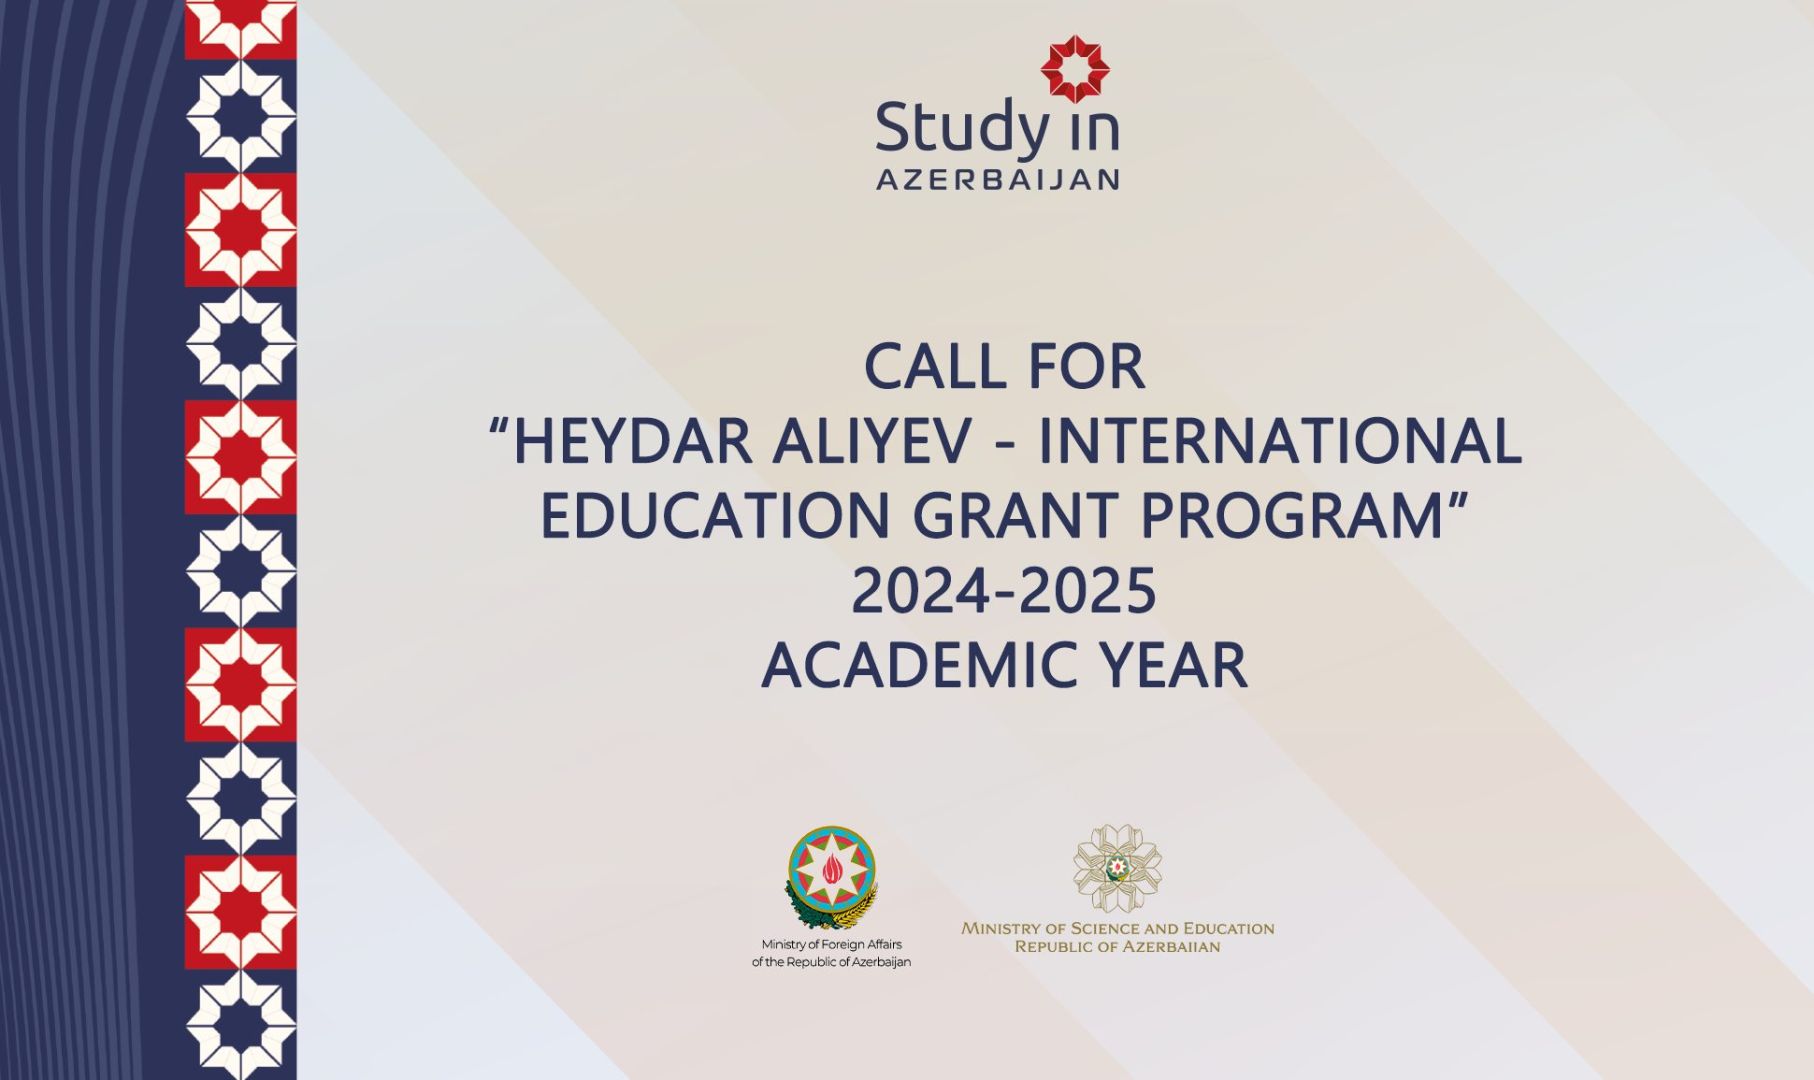 Heydar Aliyev-International Education Grant Program announced for 2024-2025 academic year